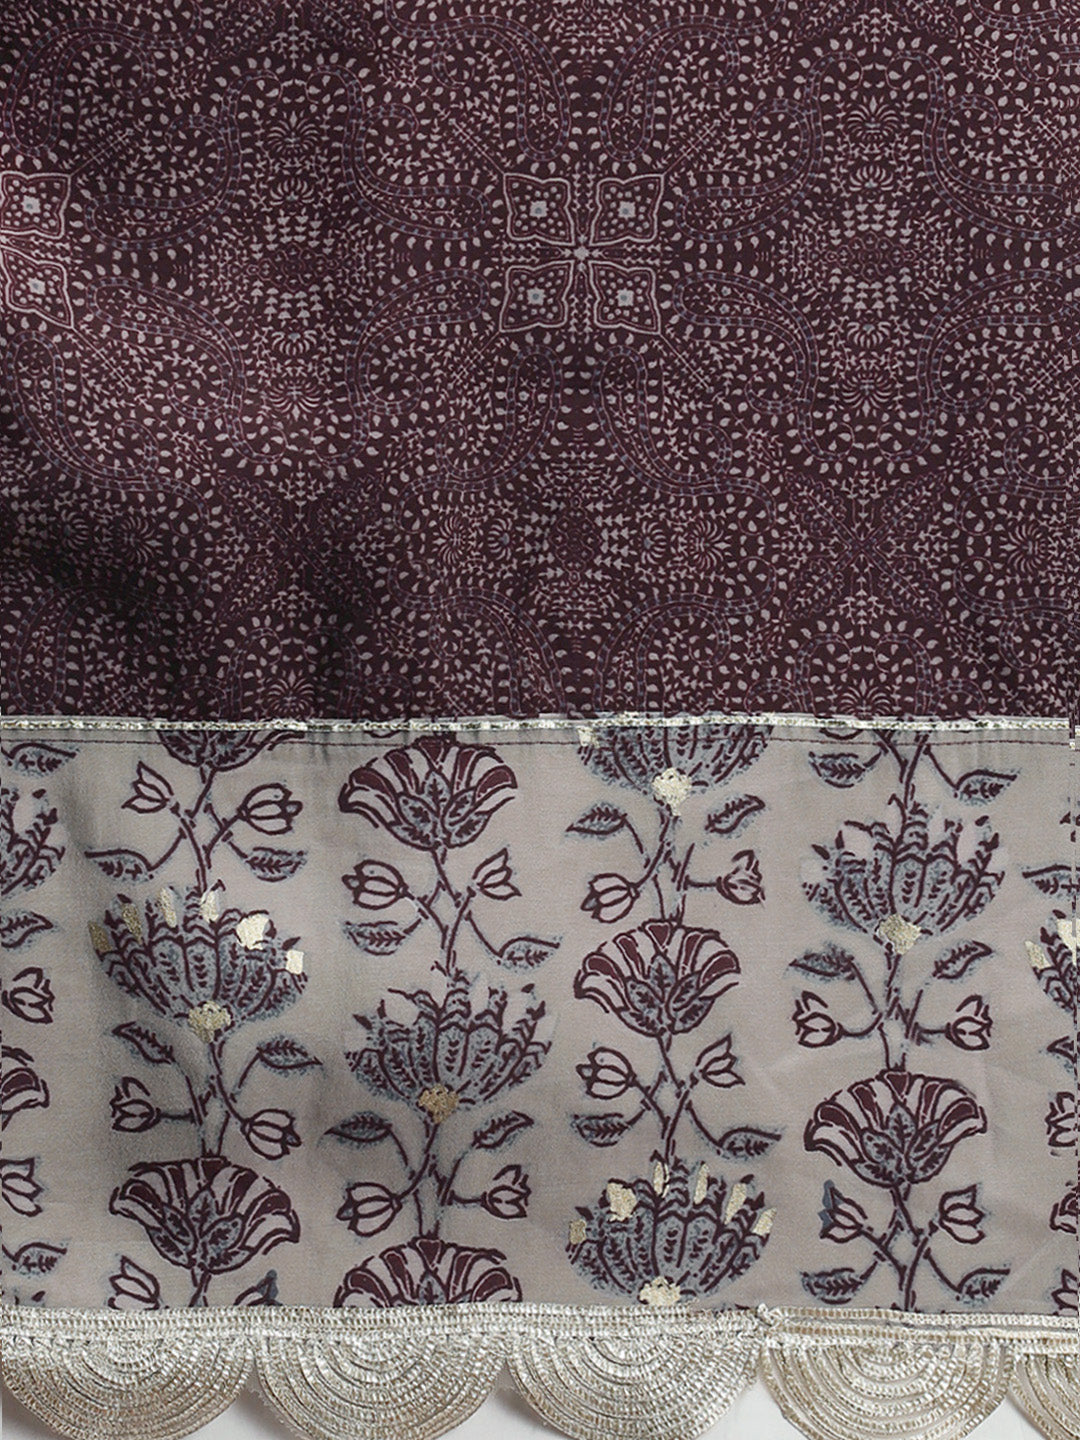 Women's Grey & Burgundy Embroidered A-Line Kurta With Trouser & Dupatta - Navyaa